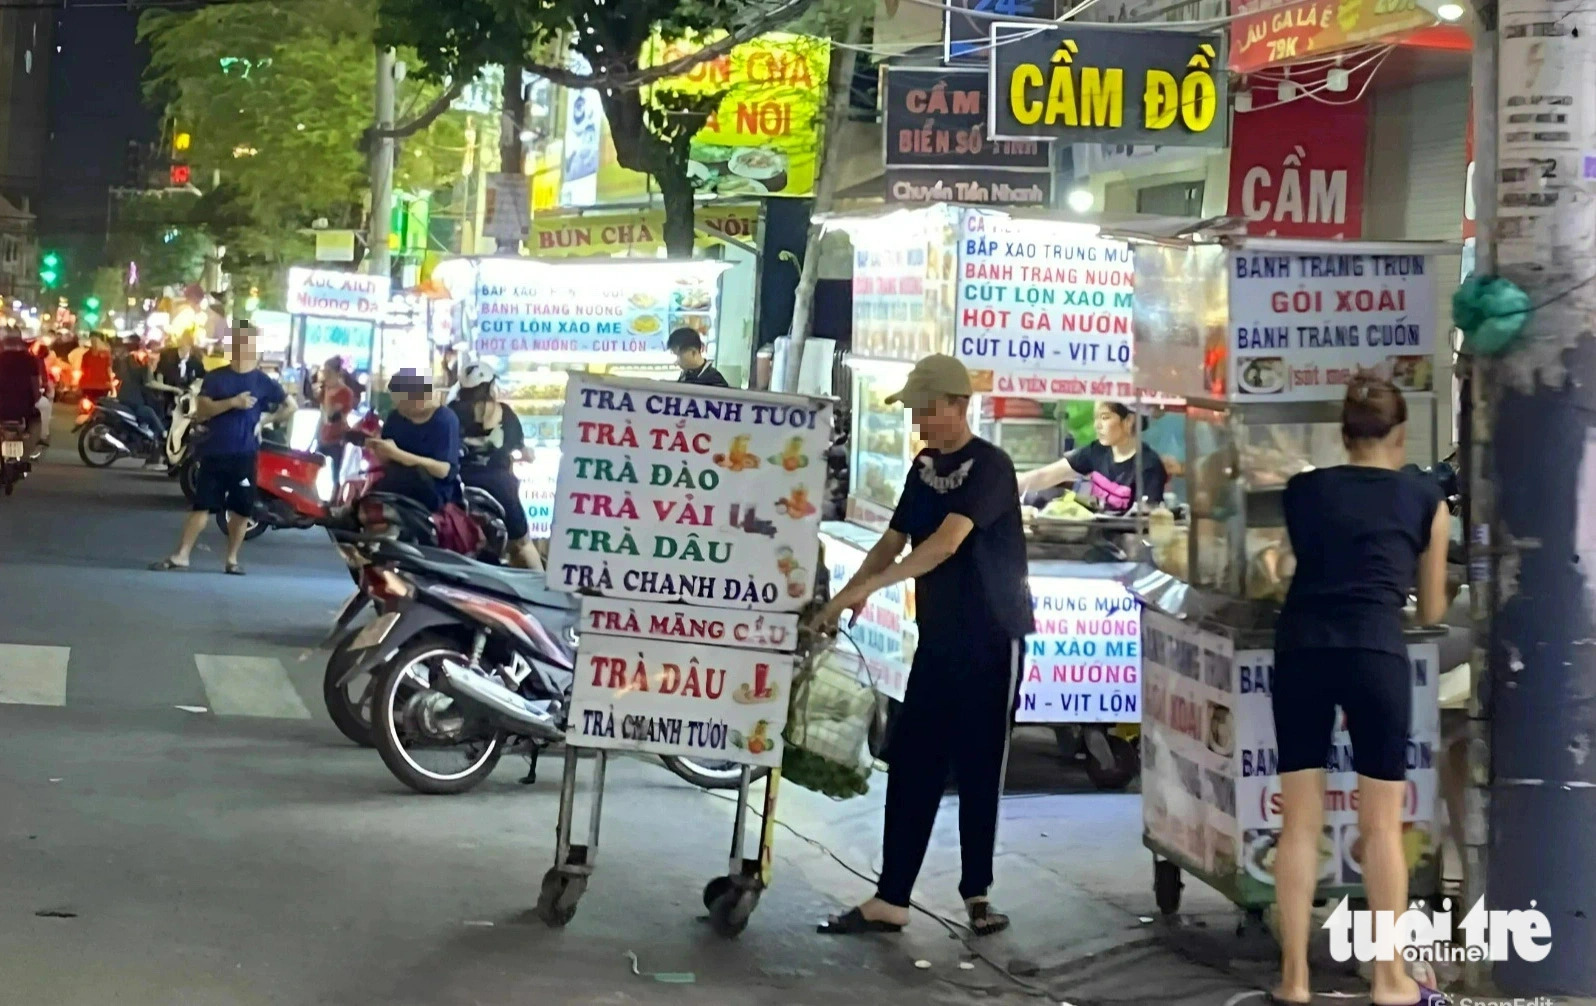 Over 80 street food carts encroach on Ho Chi Minh City street